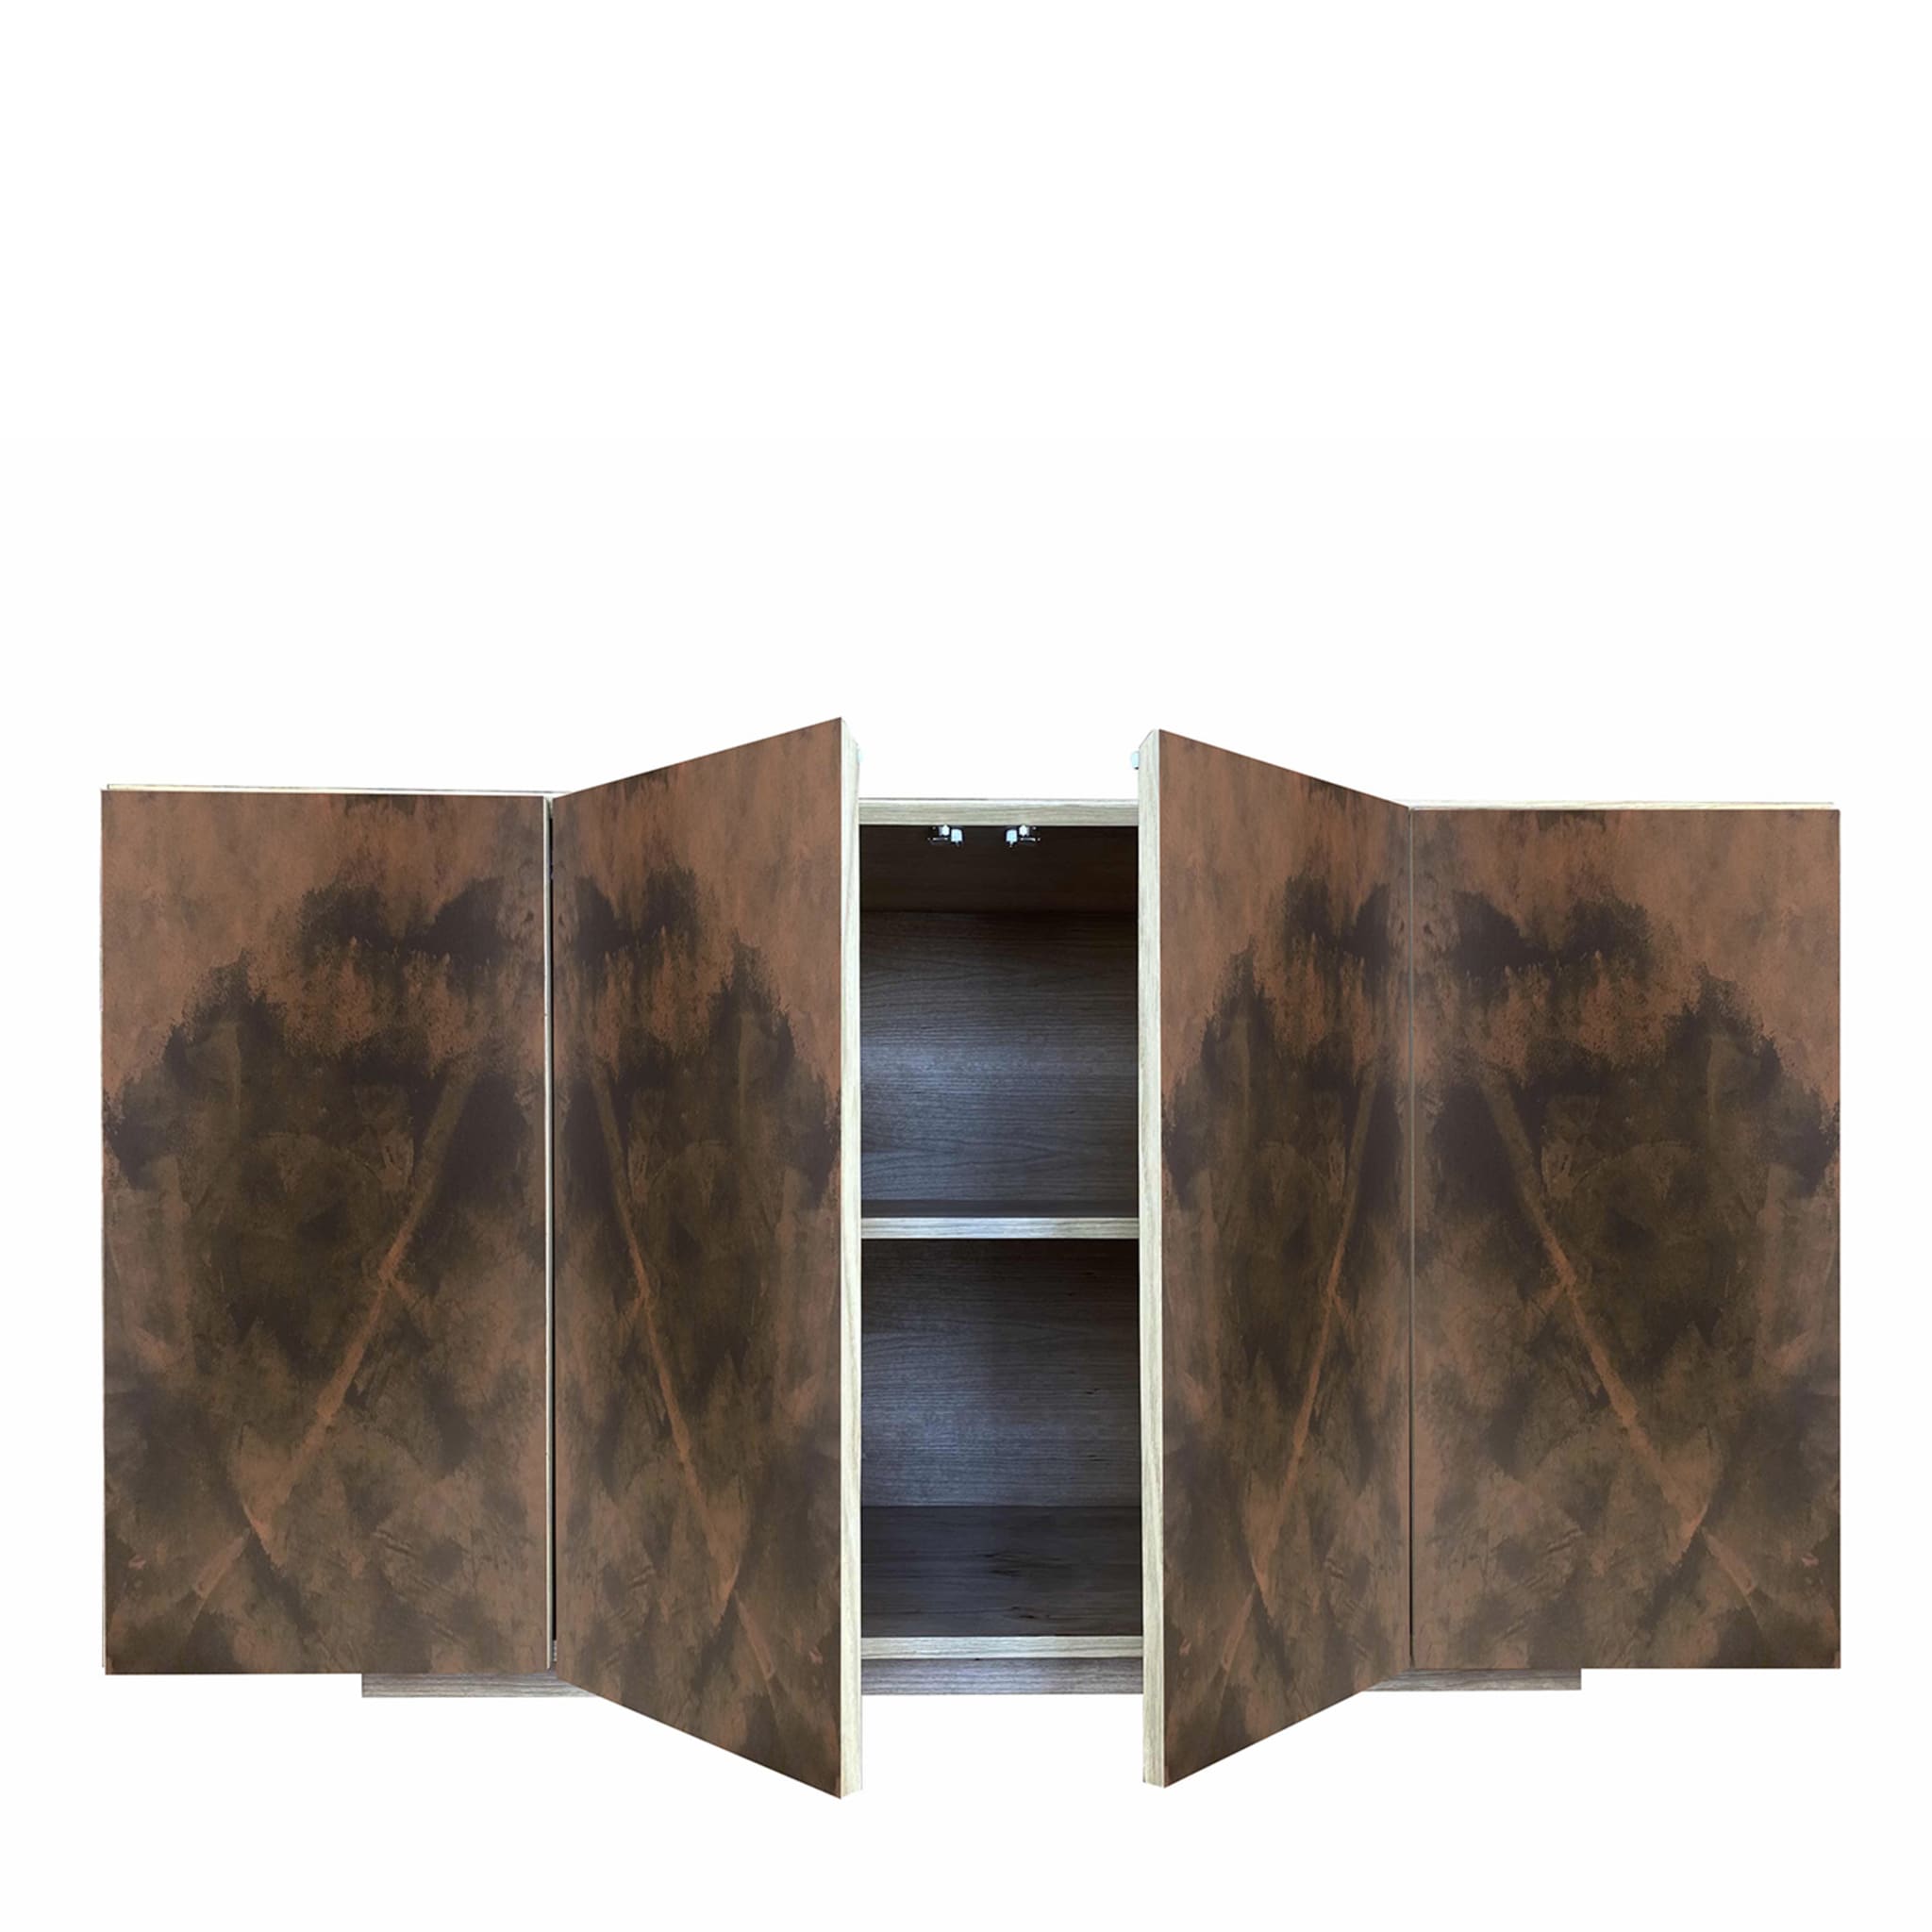 Boccadarno Tre 4-Door Brown Sideboard by Meccani Studio - Alternative view 5